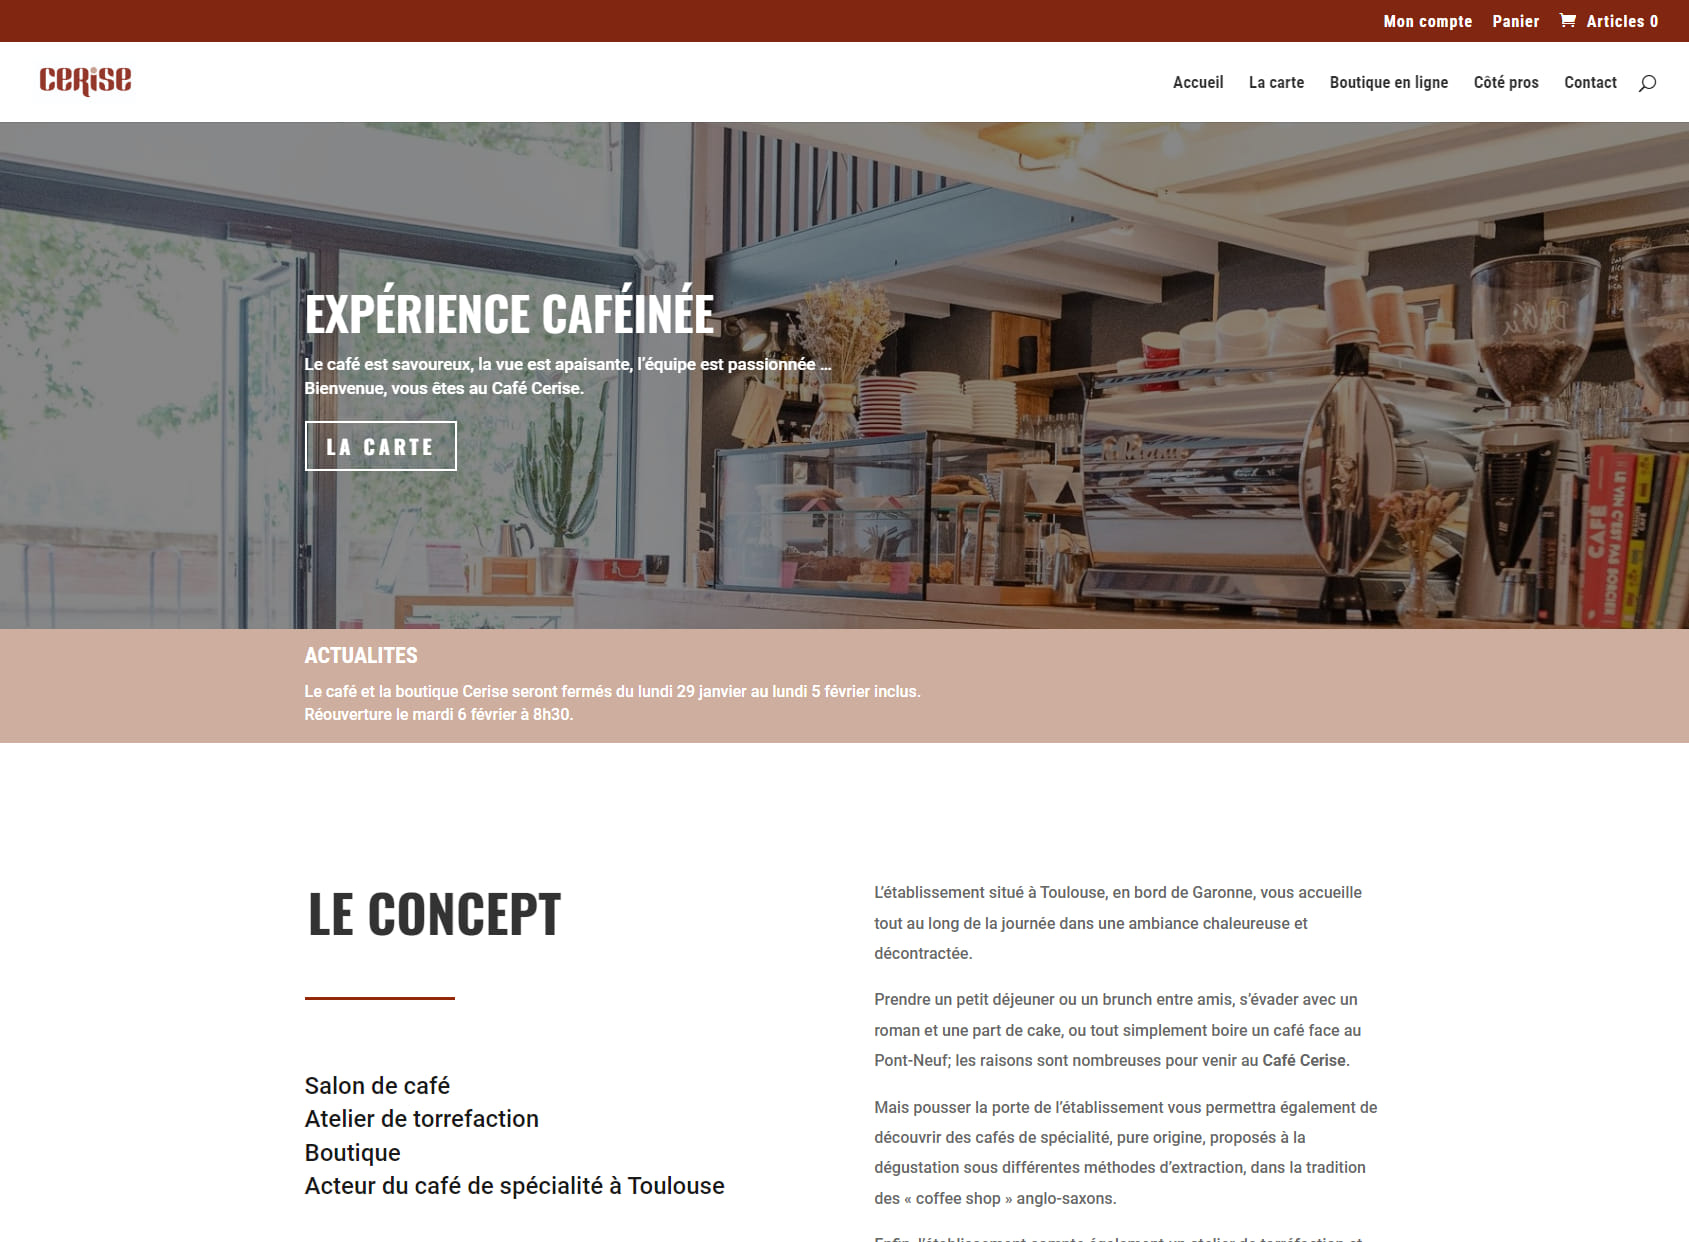 CERISE - Le Café